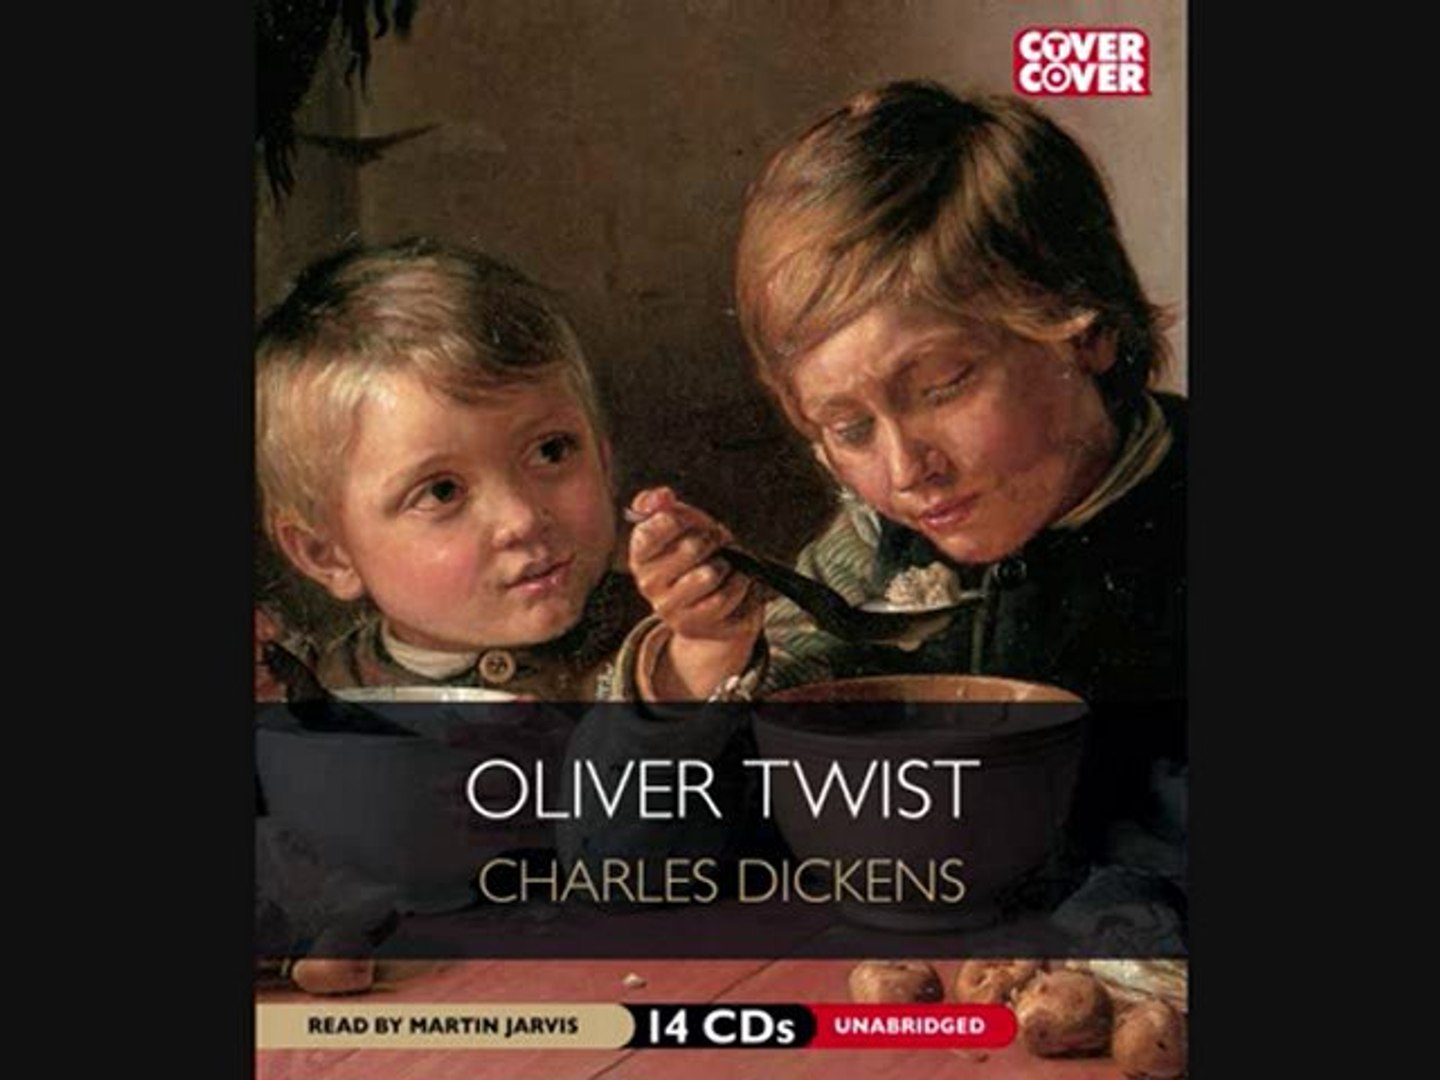 Oliver Twist S1 - Drama